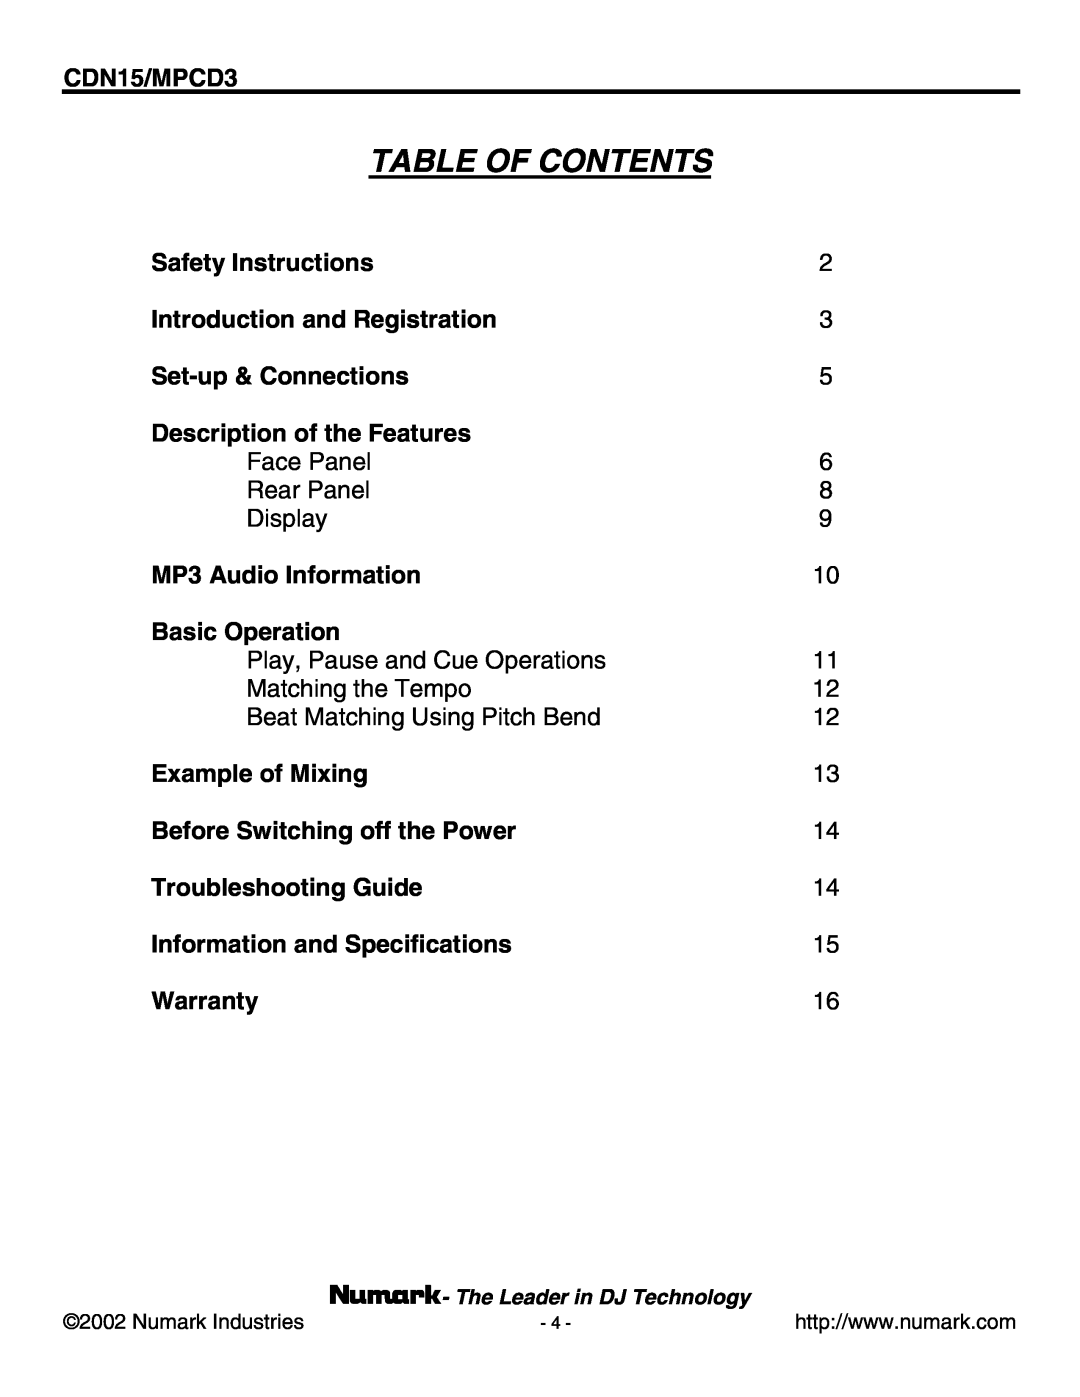 Numark Industries MPCD3, CDN15 user manual Table Of Contents 